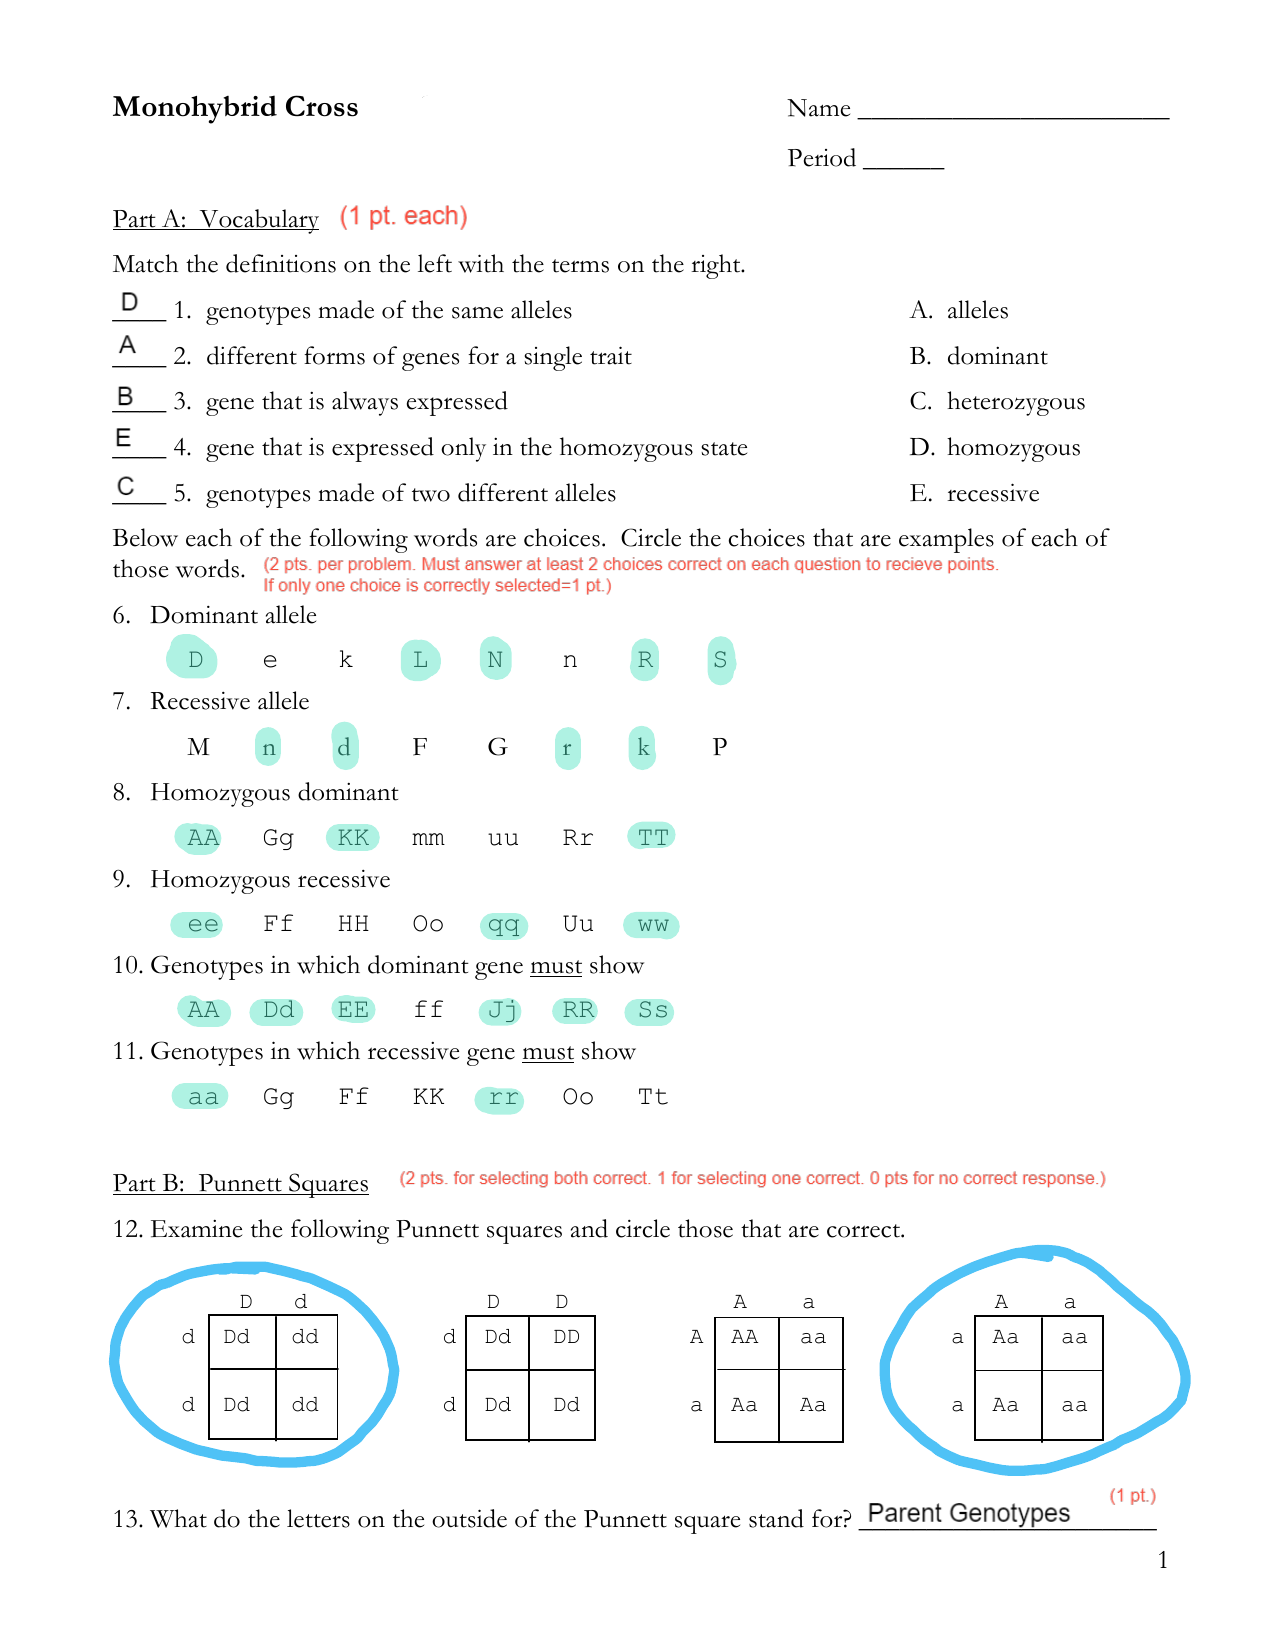 Monohybrid Cross Activity Sheet (Key) In Monohybrid Cross Practice Problems Worksheet